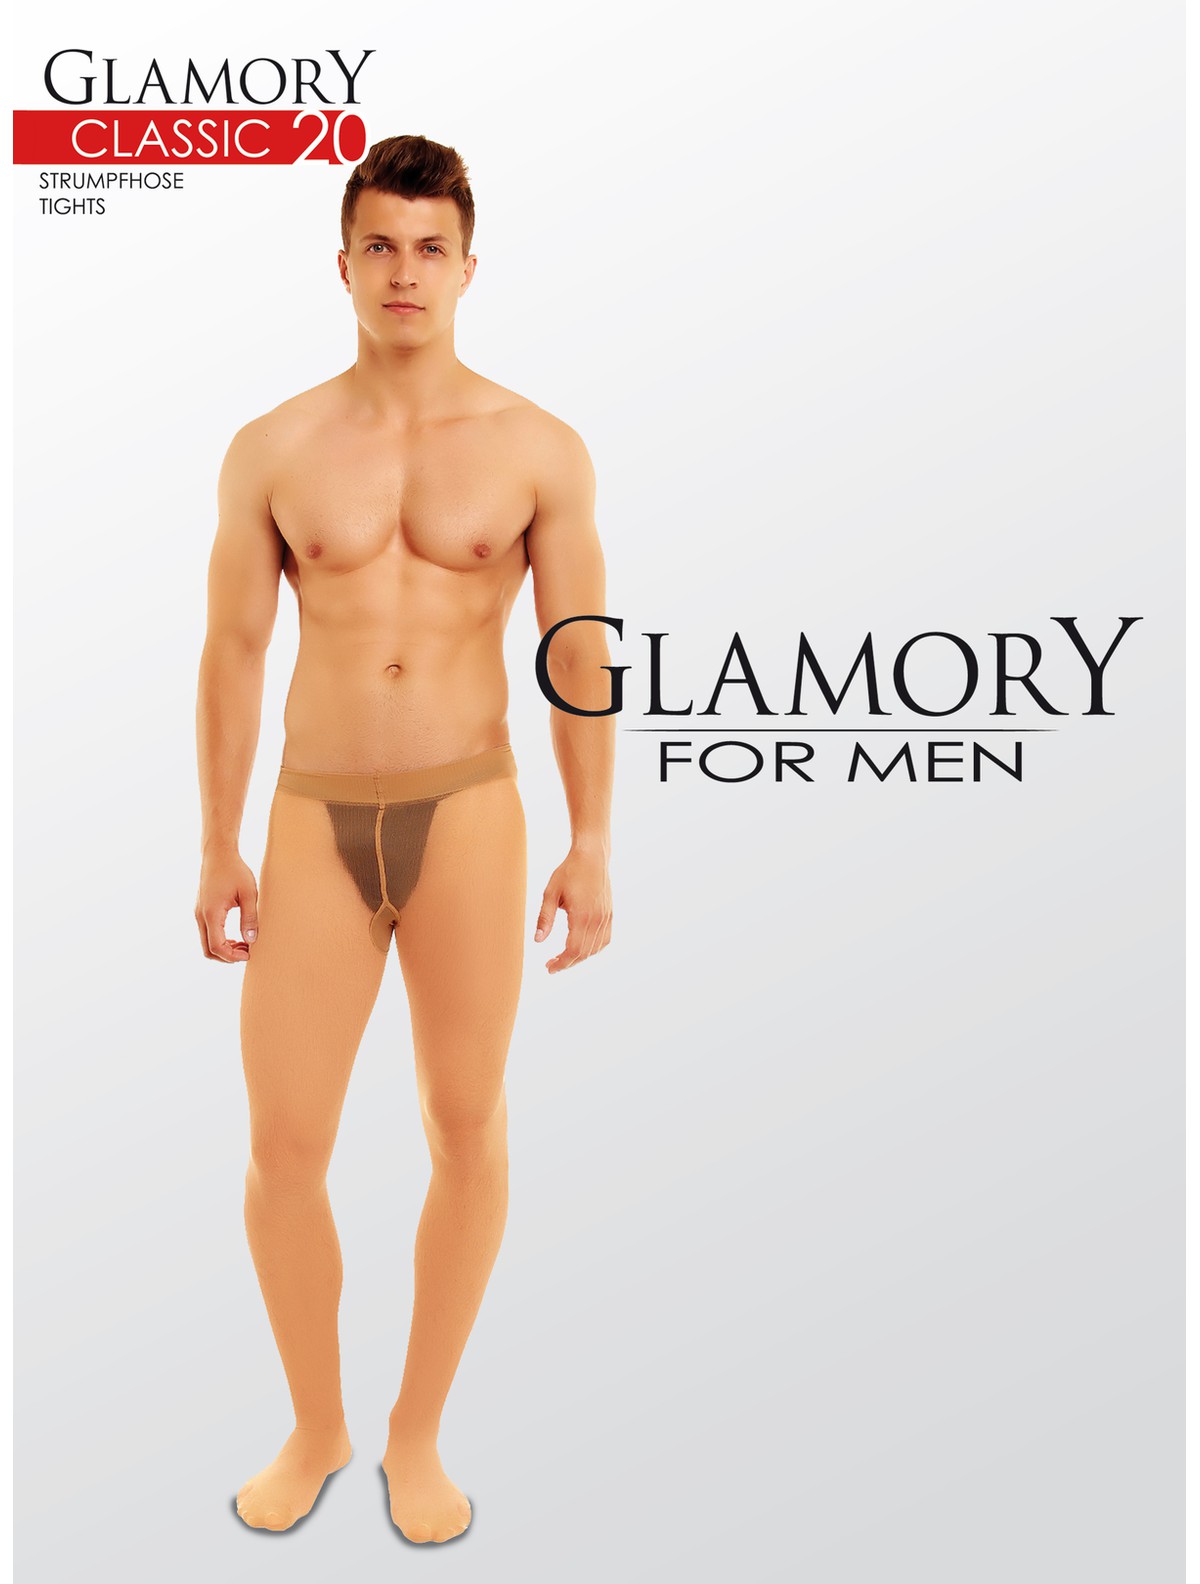 Glamory for Men Classic 20 Strumpfhose - schwarz, teint